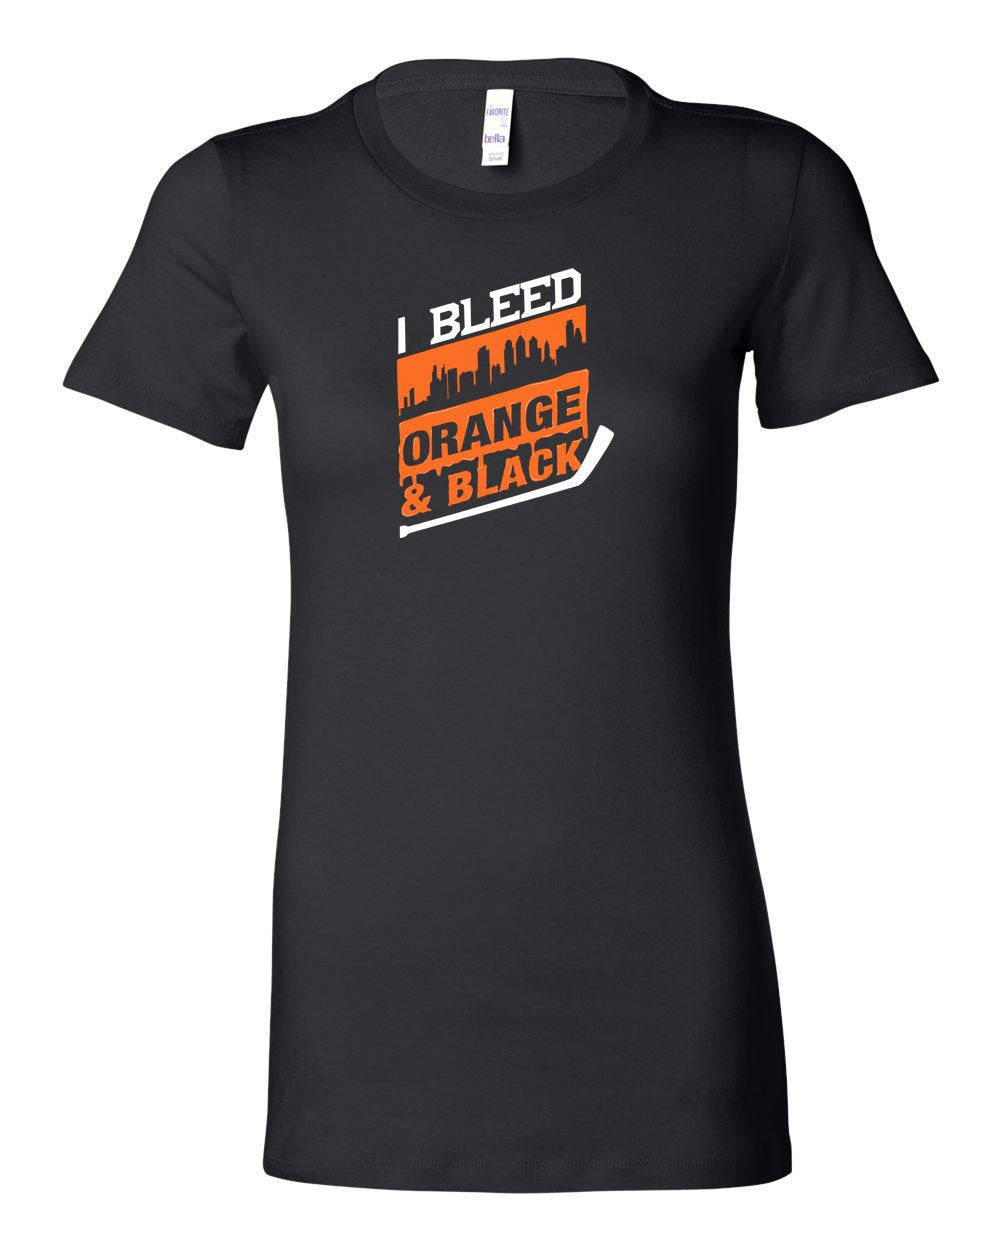 I Bleed Orange and Black LADIES Junior-Fit T-Shirt